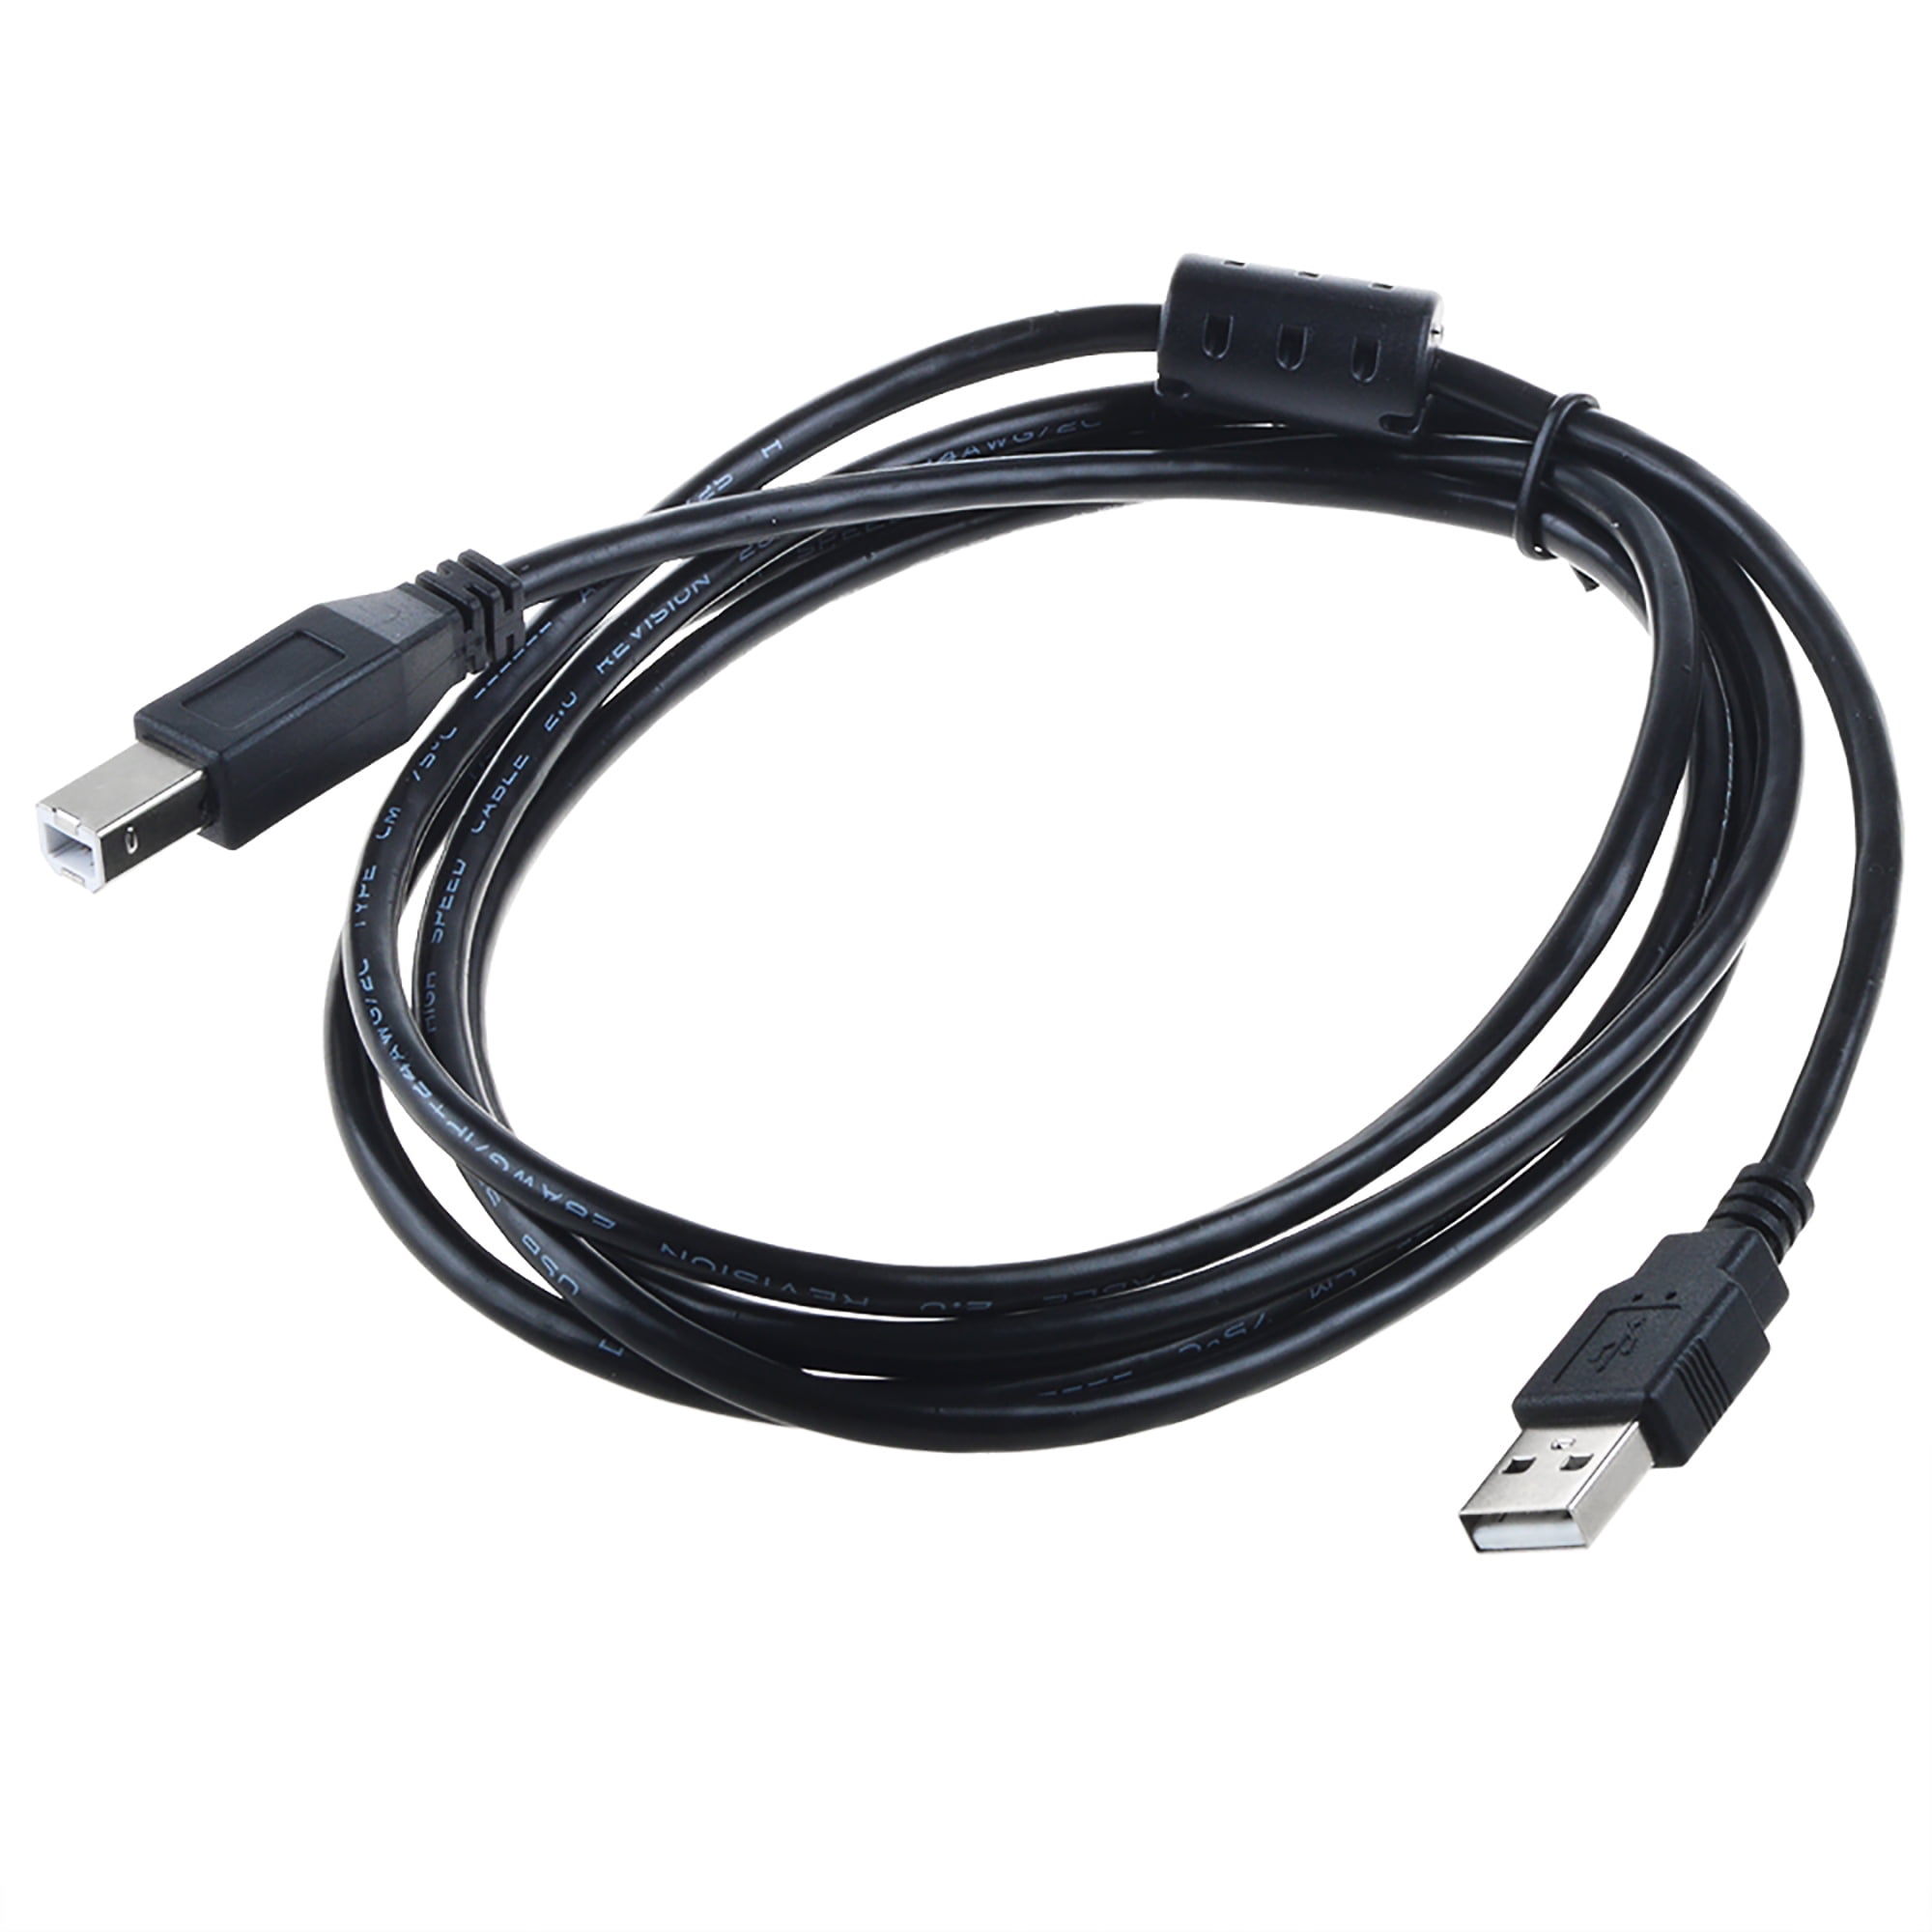 Introducir Entrada Sabio PKPOWER 6ft USB Cable Laptop Data Sync Cord for Yamaha PSR-E463 Digital  Keyboard TO HOST - Walmart.com